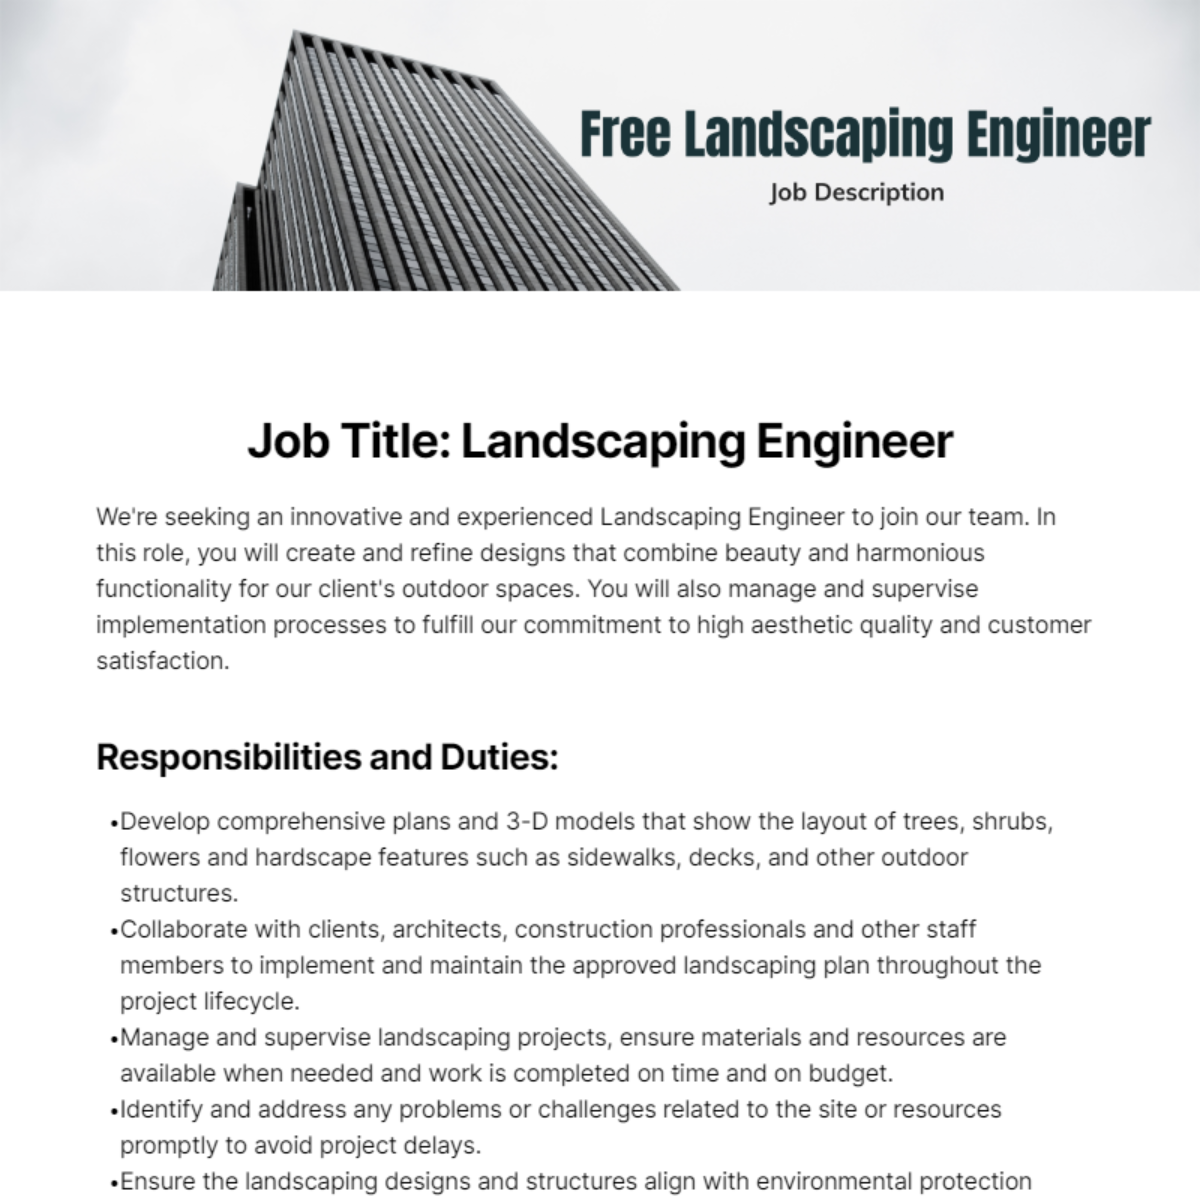 Free Landscaping Engineer Job Description Template